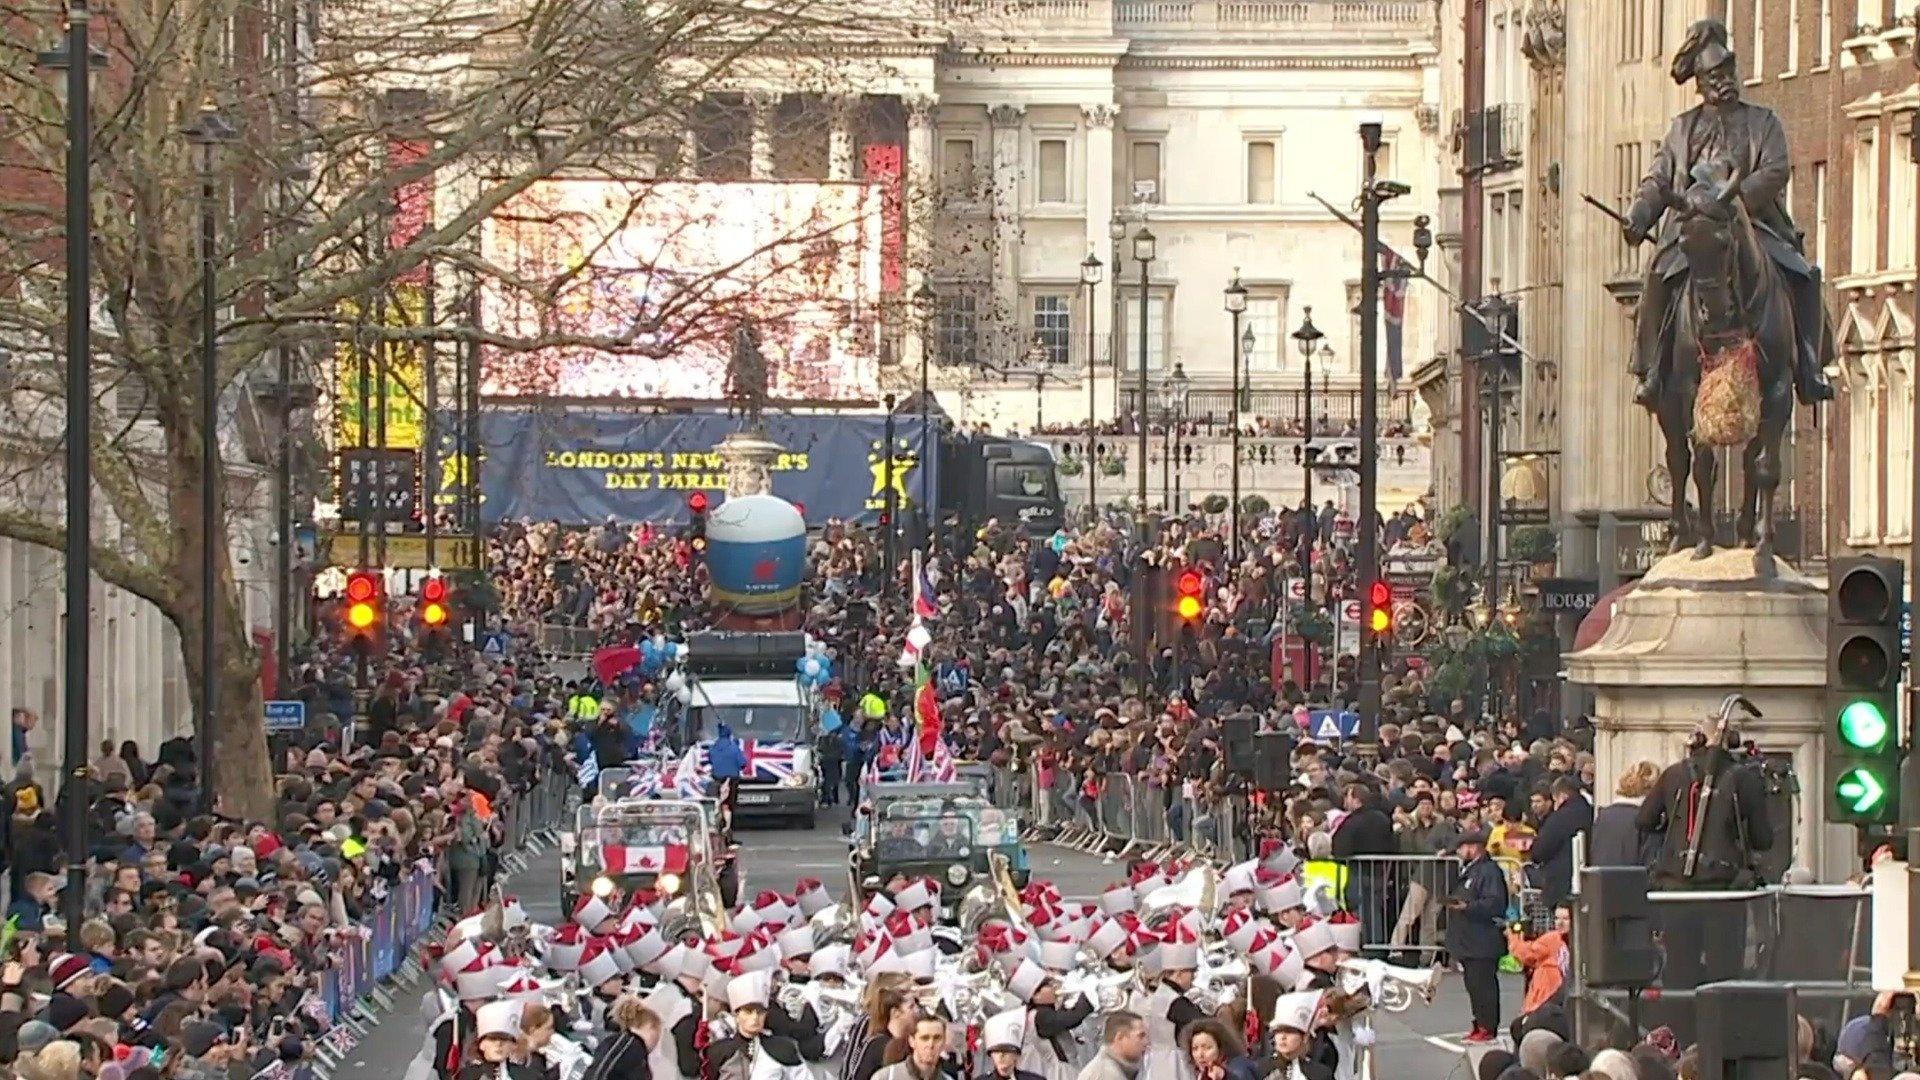 London's New Year's Day Parade 2023 WETA